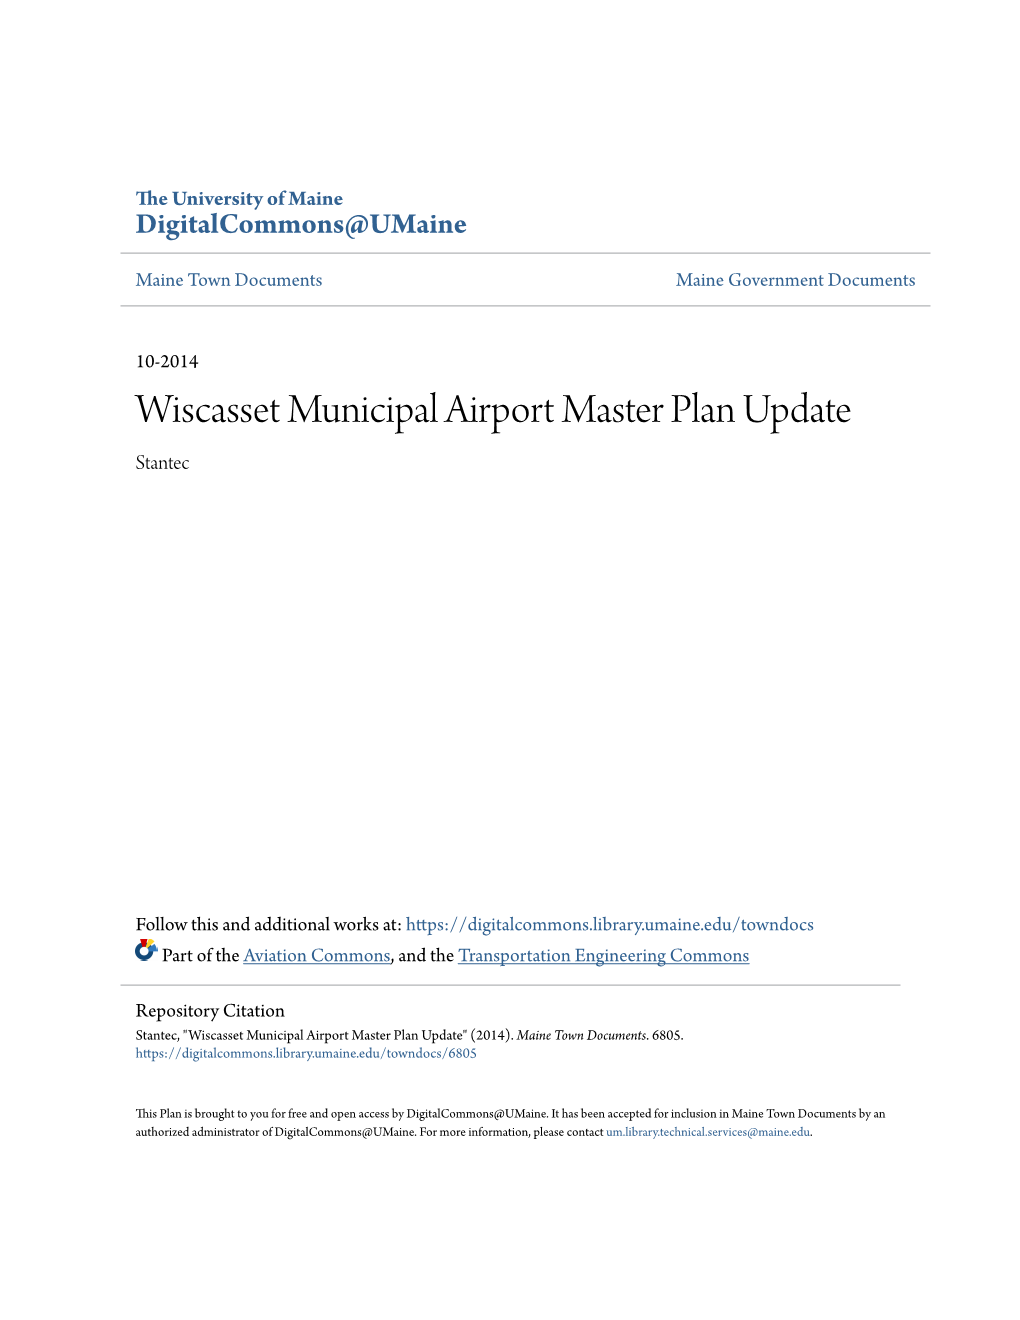 Wiscasset Municipal Airport Master Plan Update Stantec